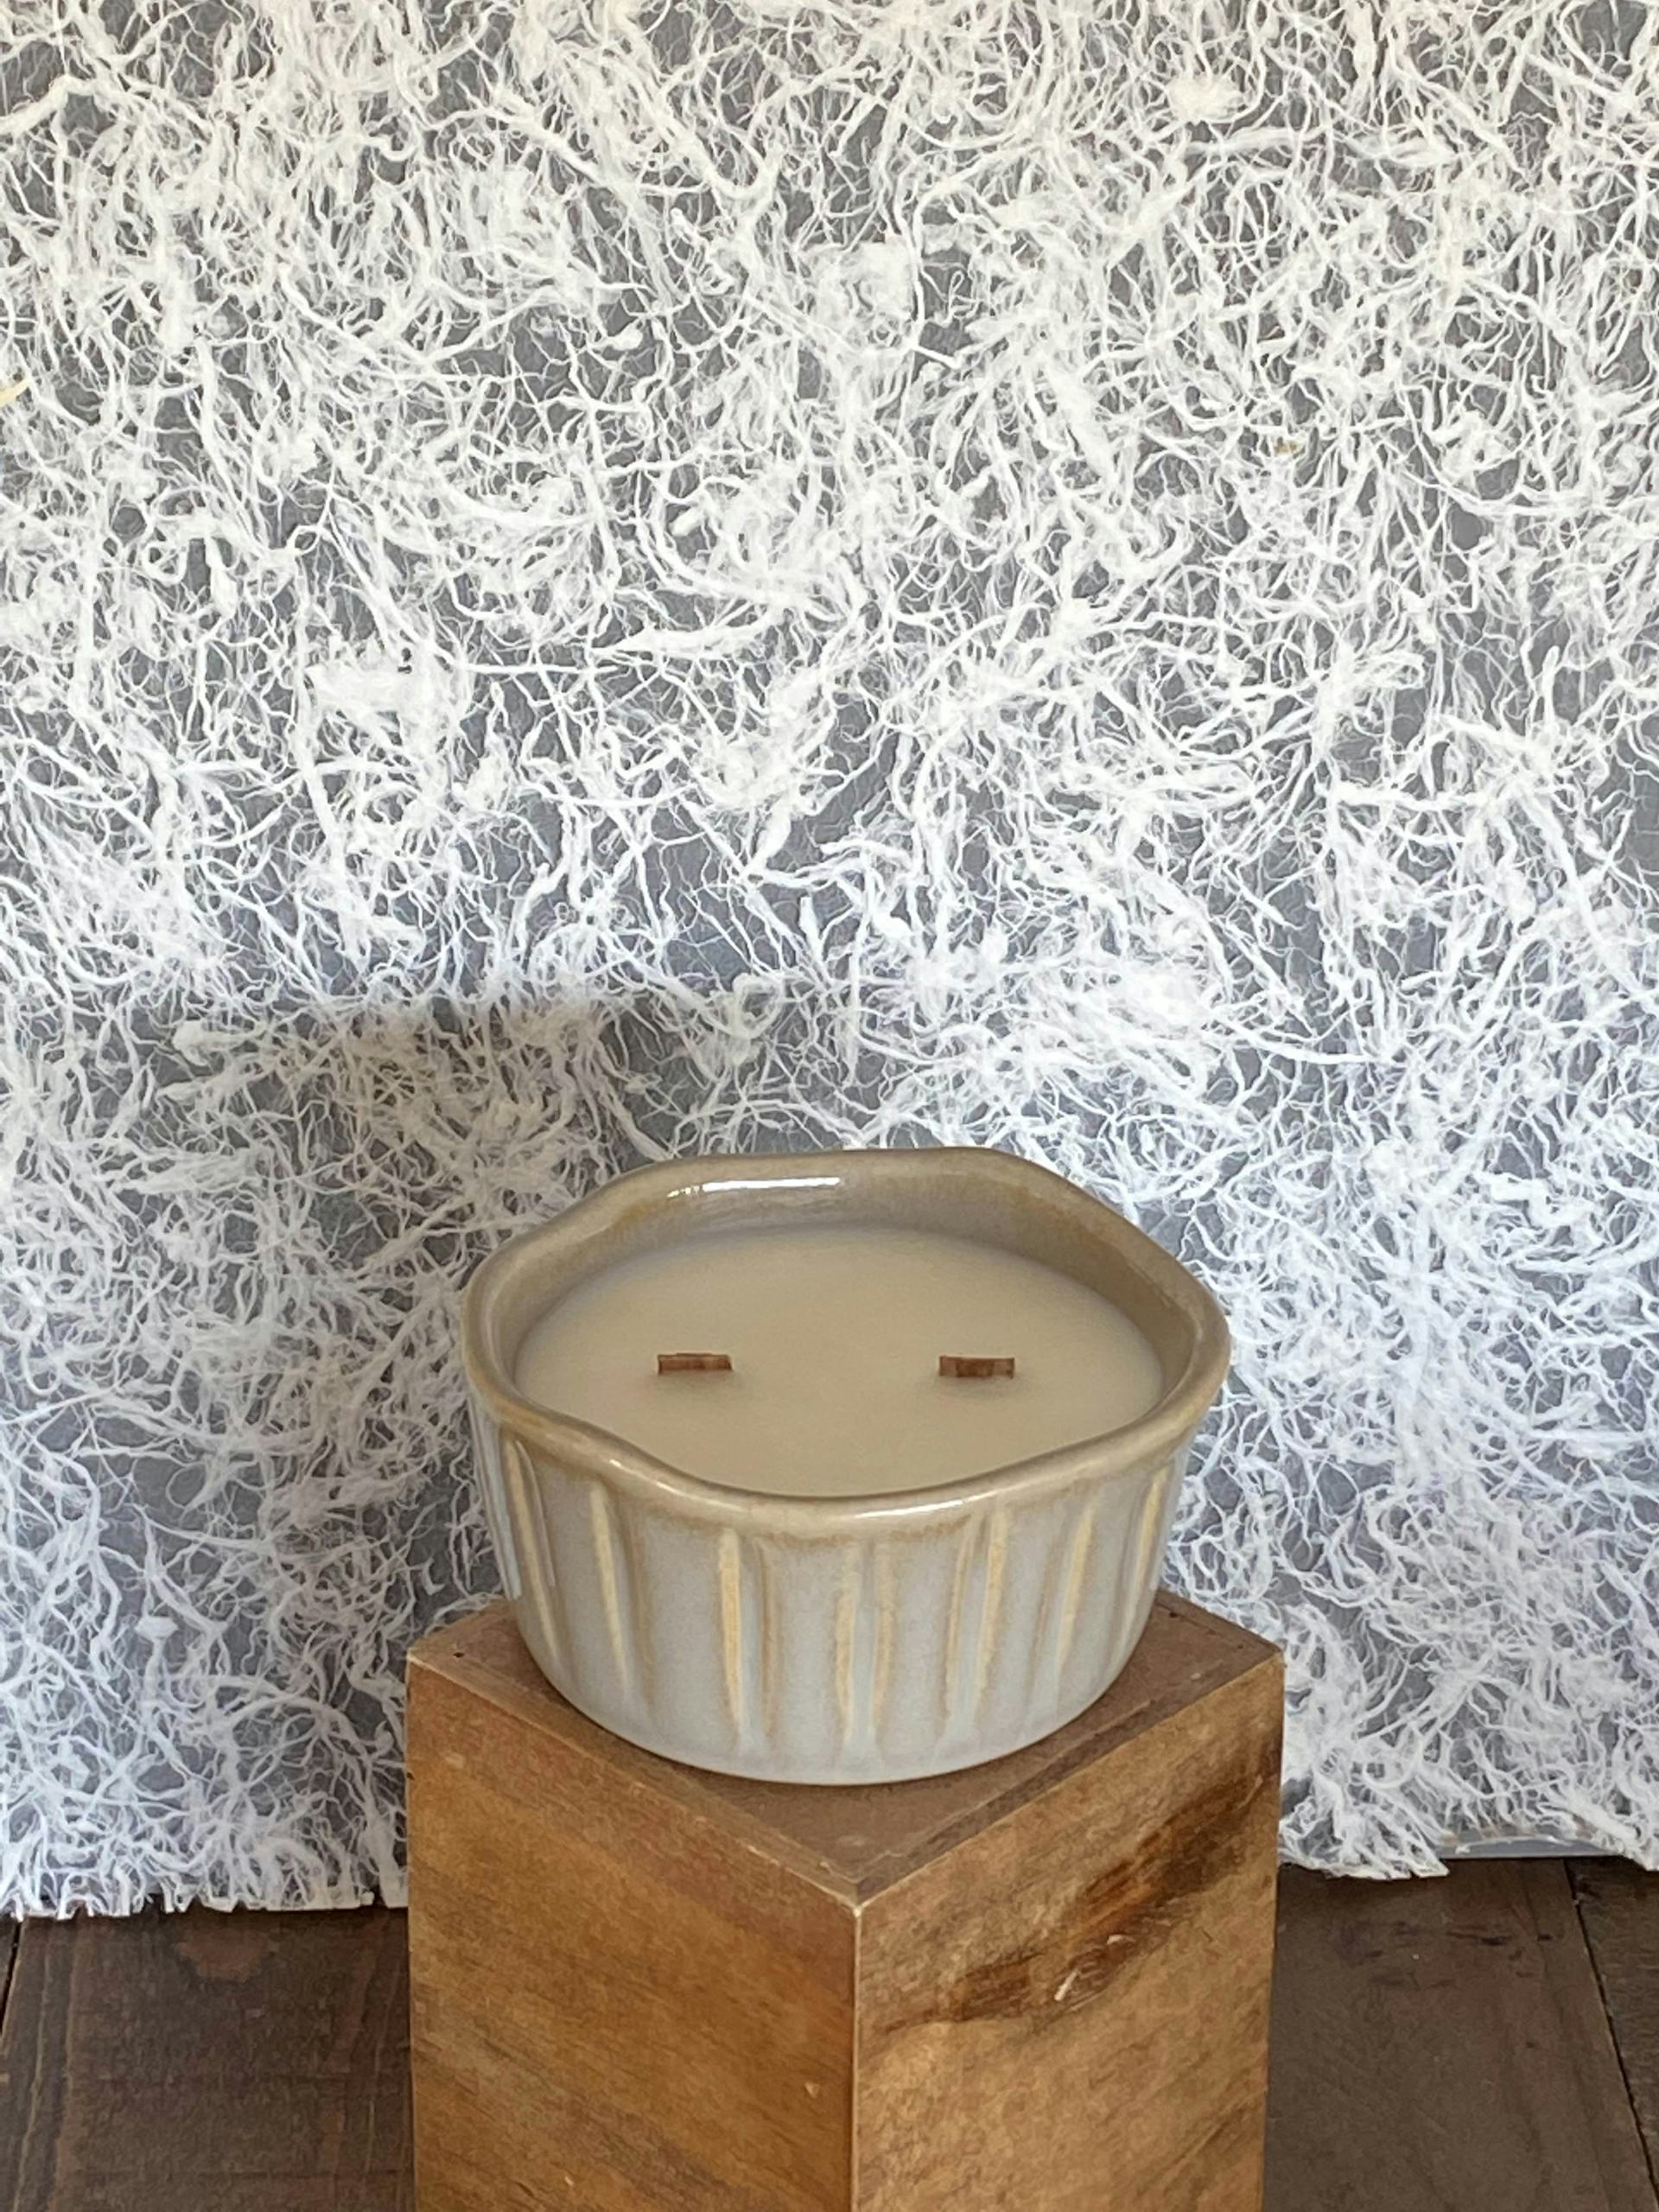 Product Image: Seasonal Fall Candle - Small